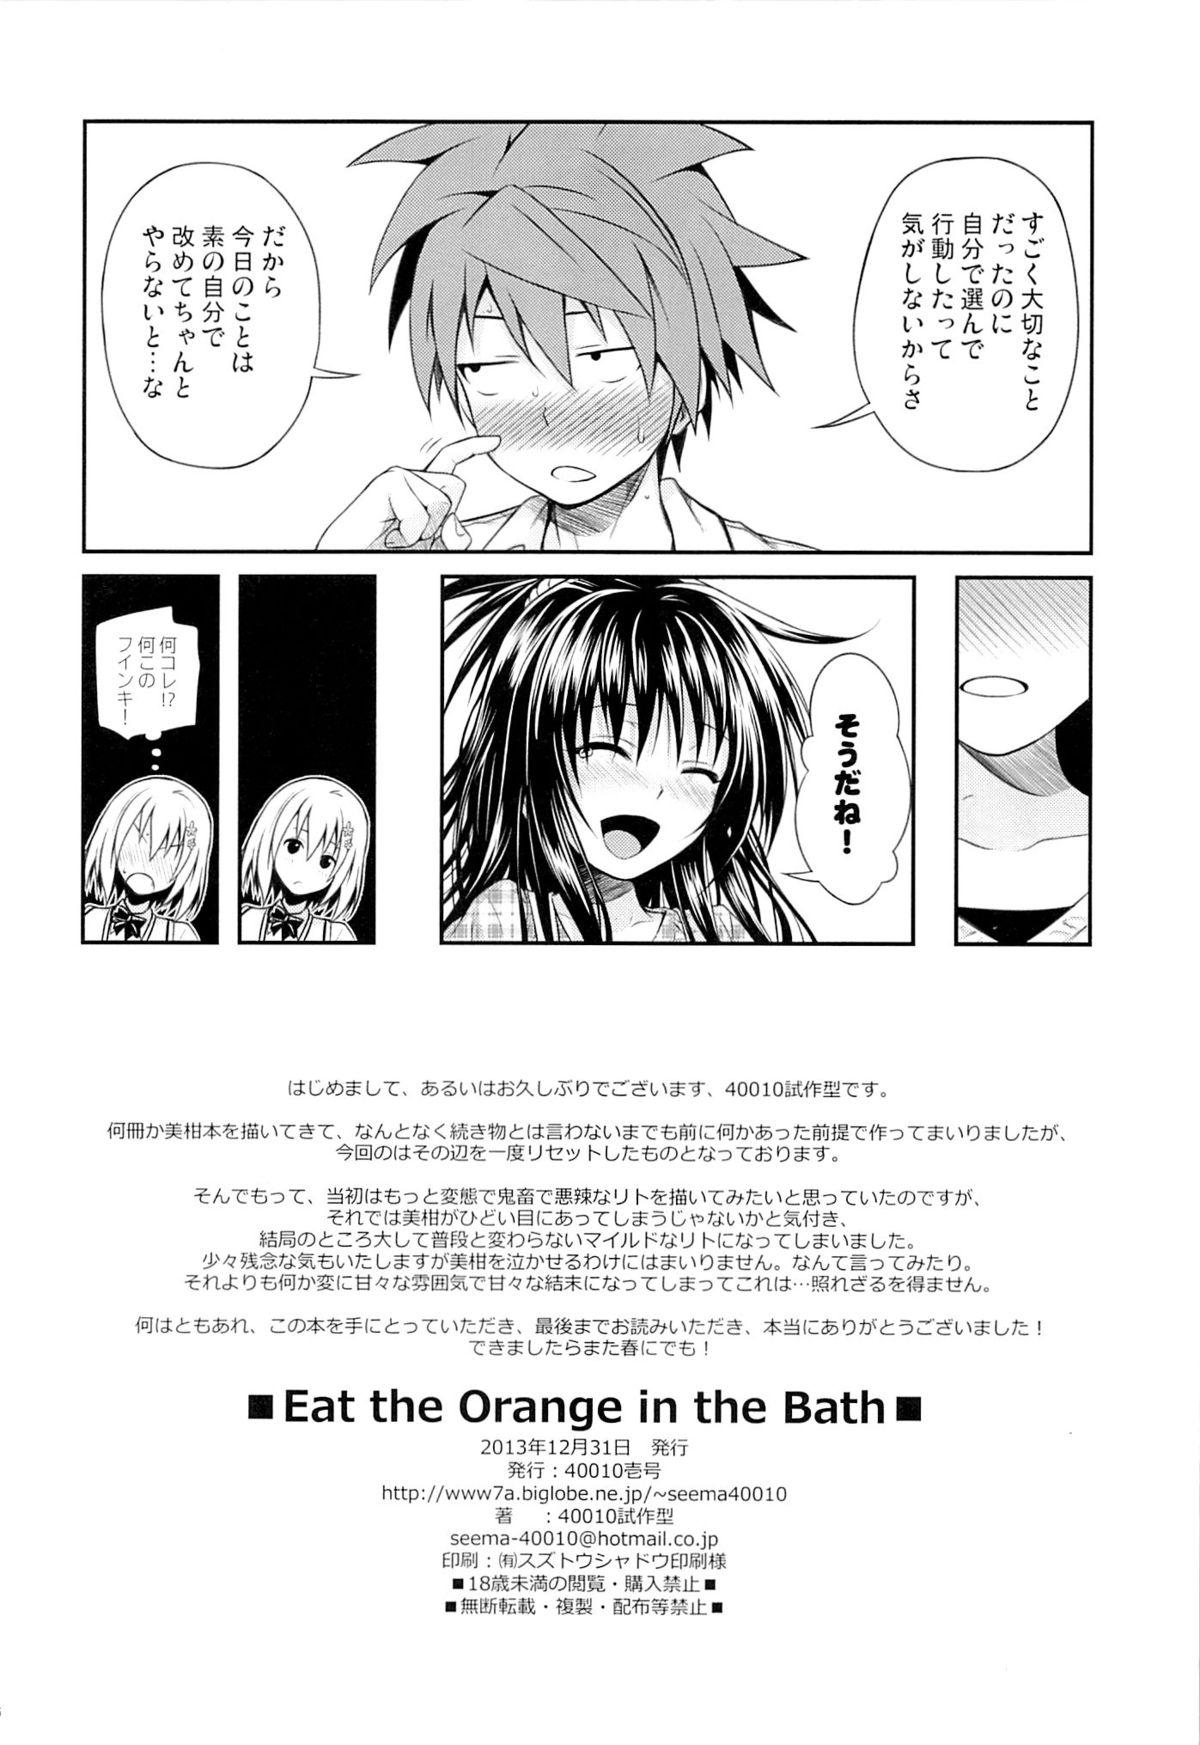 Eat the Orange in the Bath 22